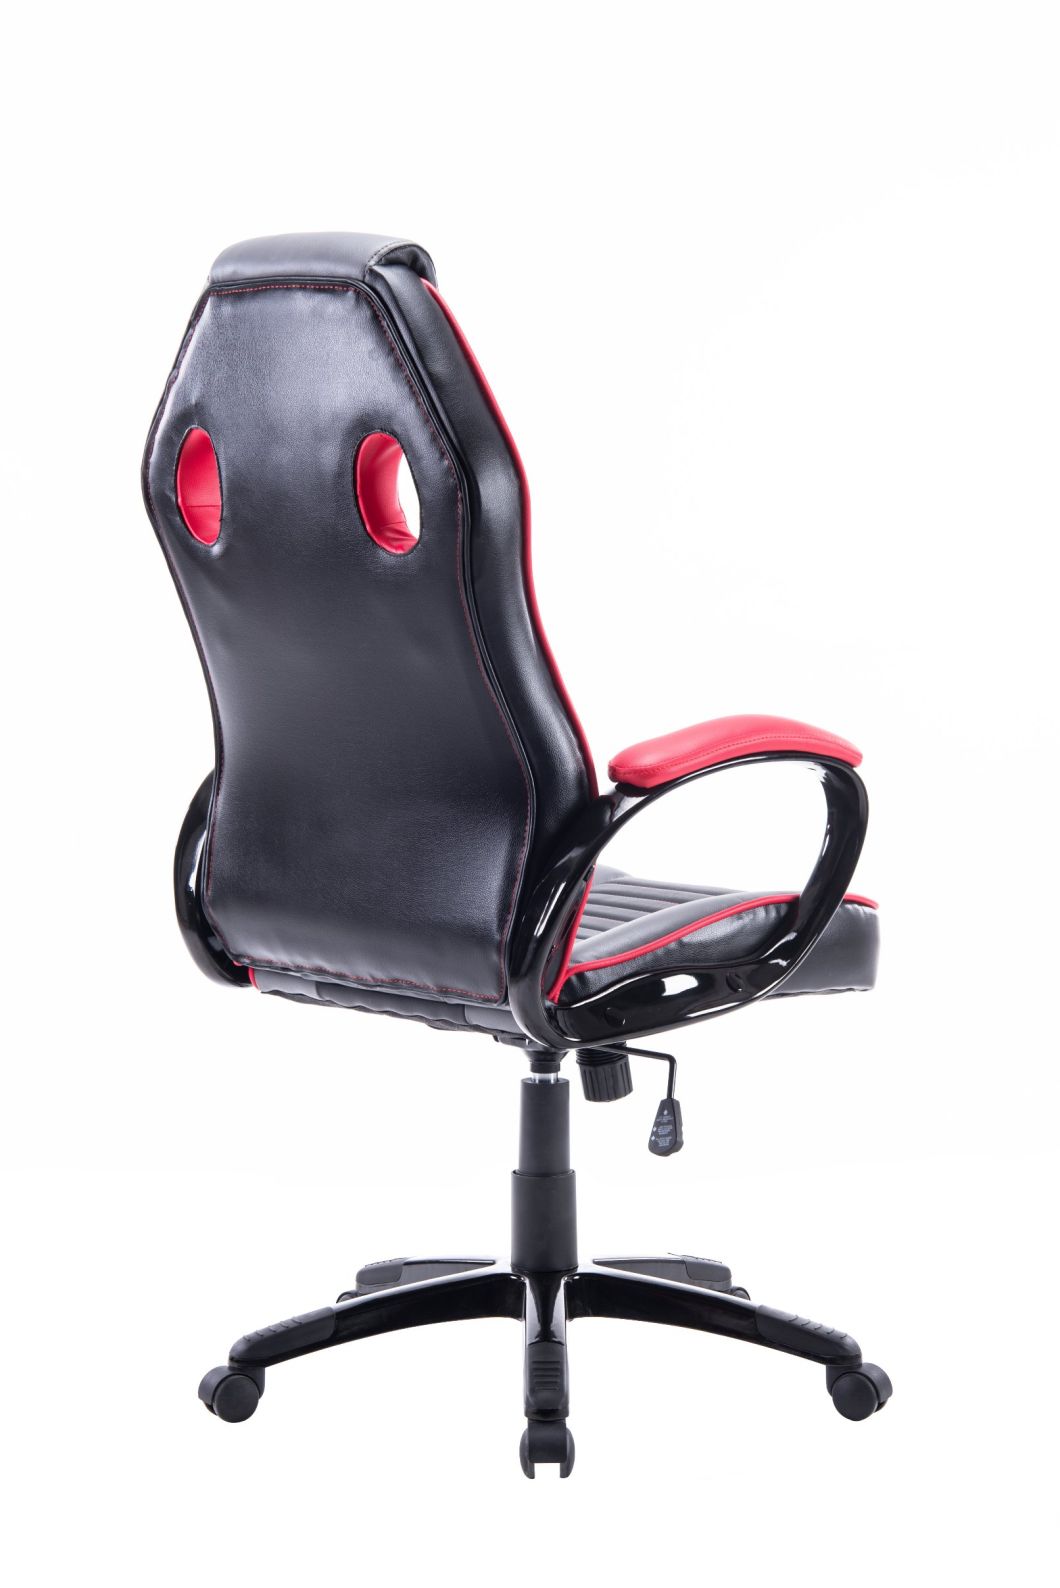 Human Shape Computer Comfortable PU+Mesh Racing Gaming Office Chair